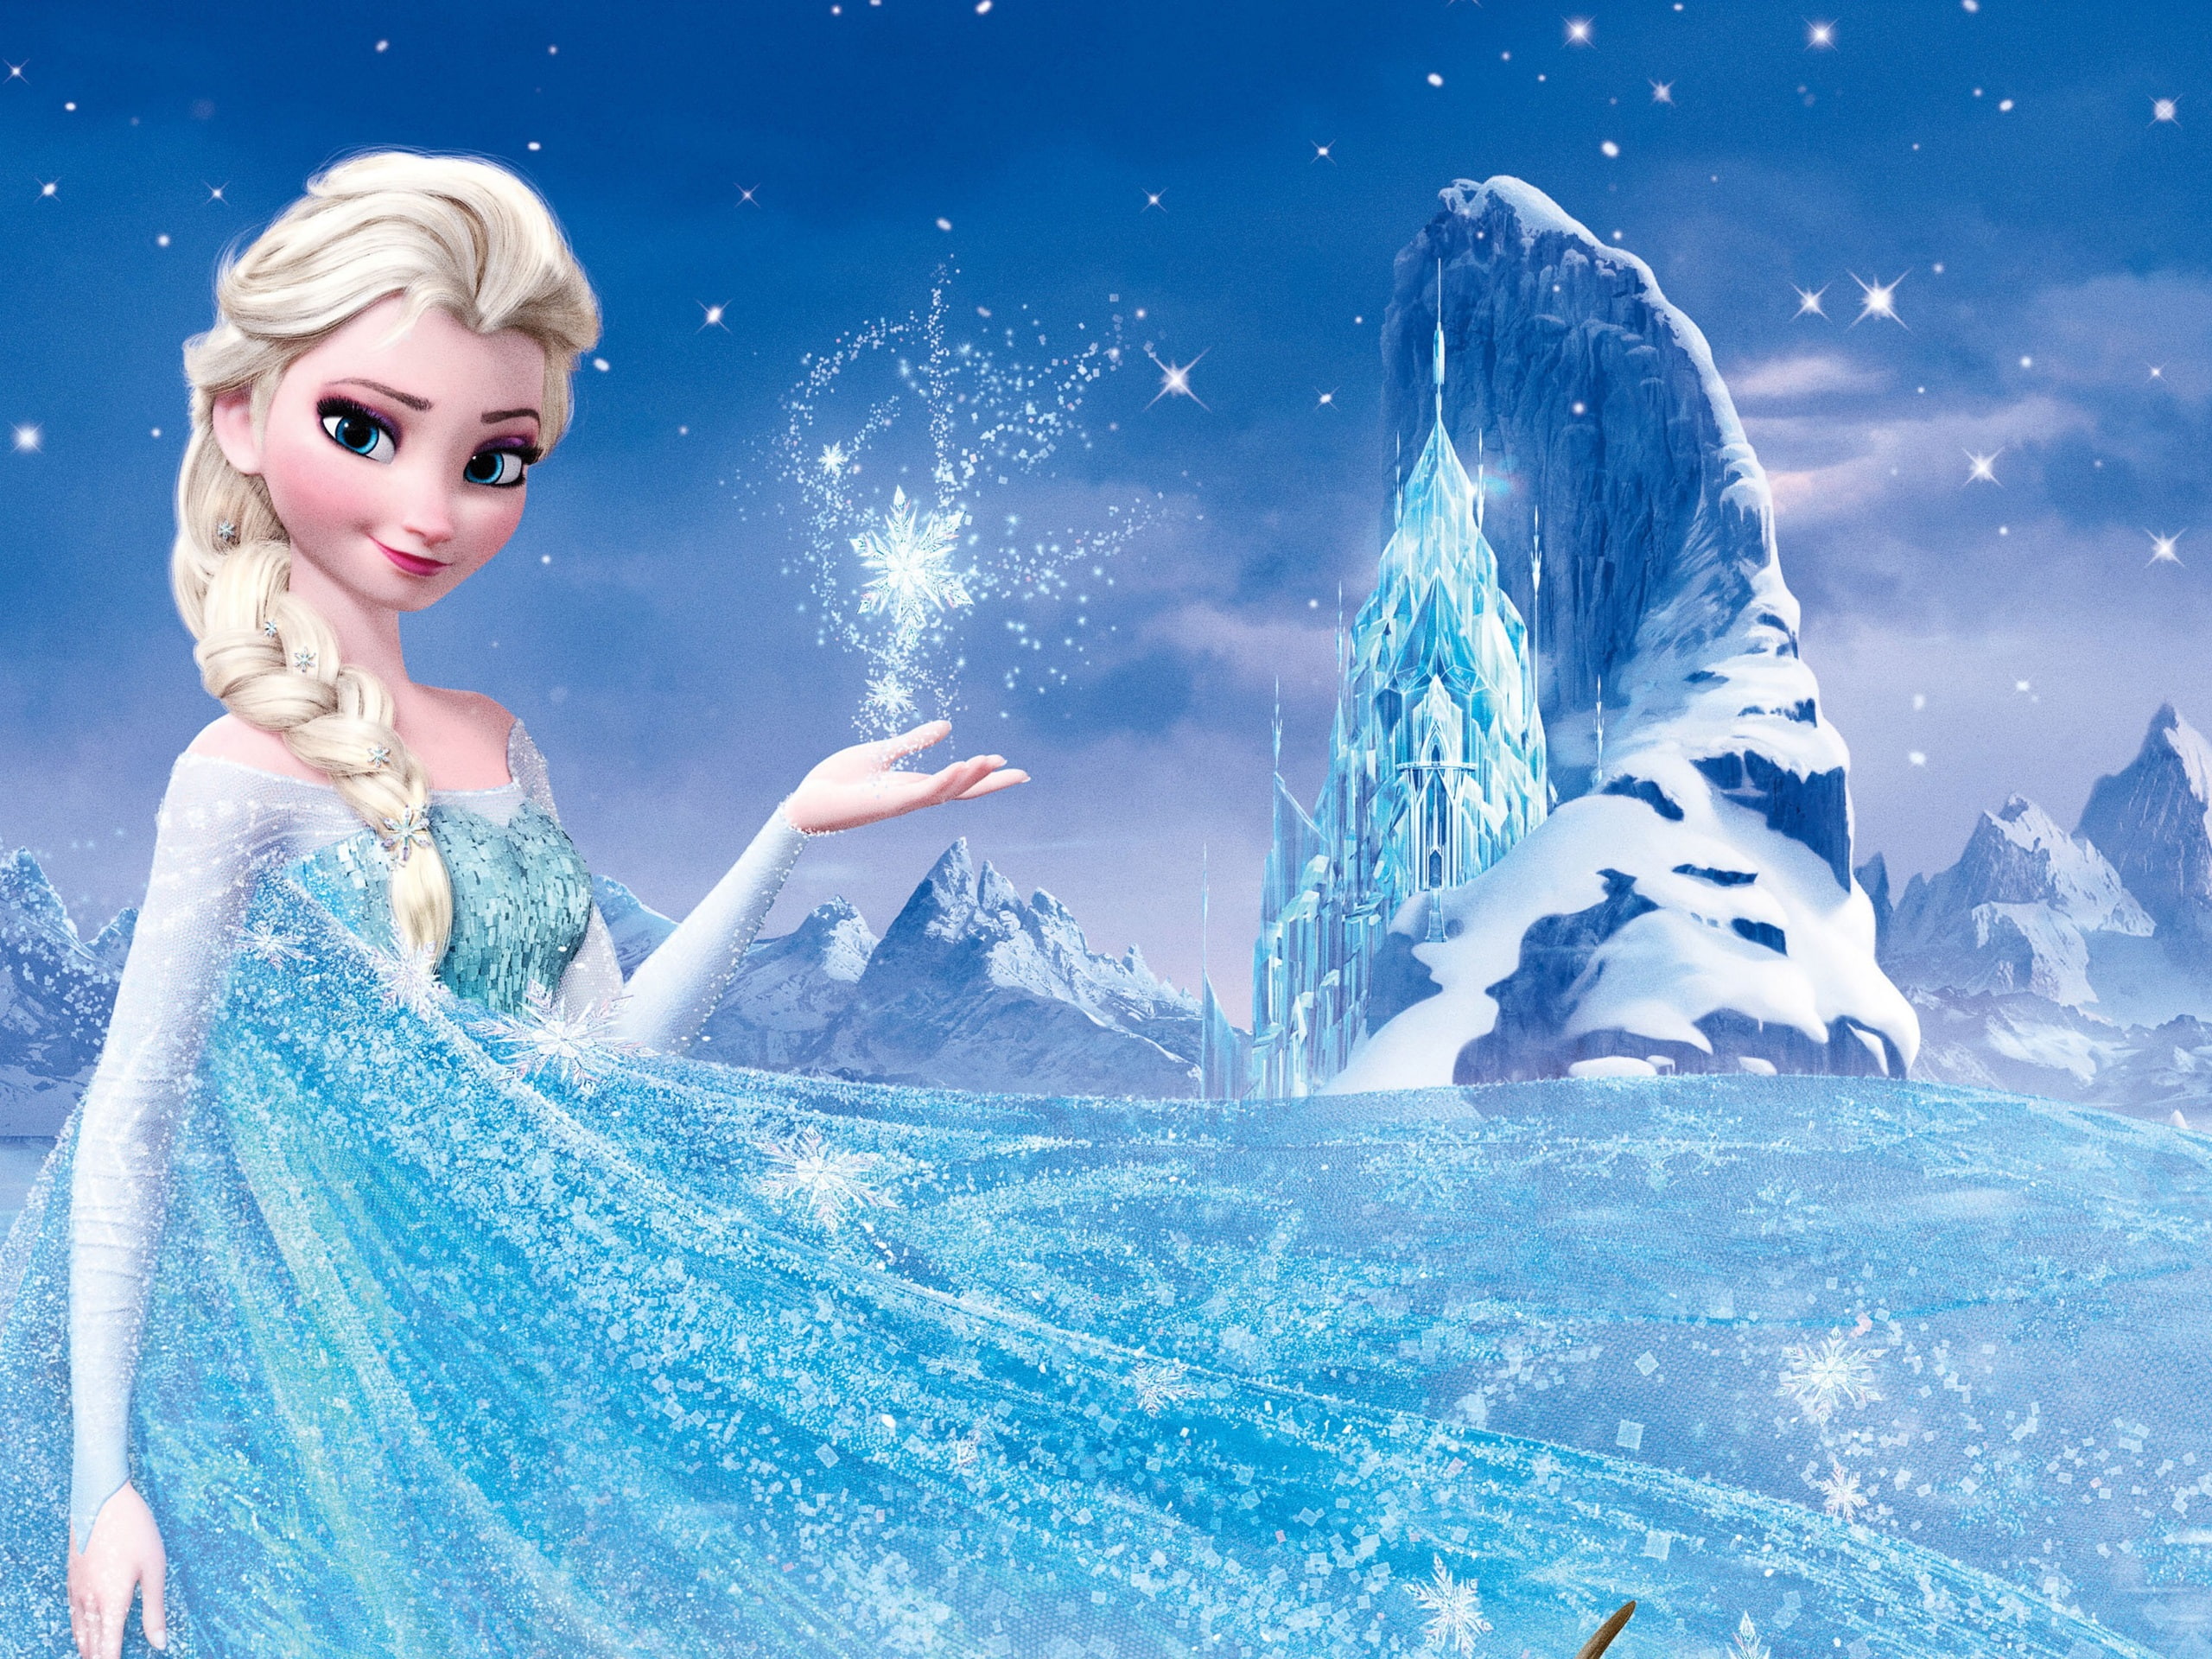 Frozen, Disney 2013 movie, Princess Elsa